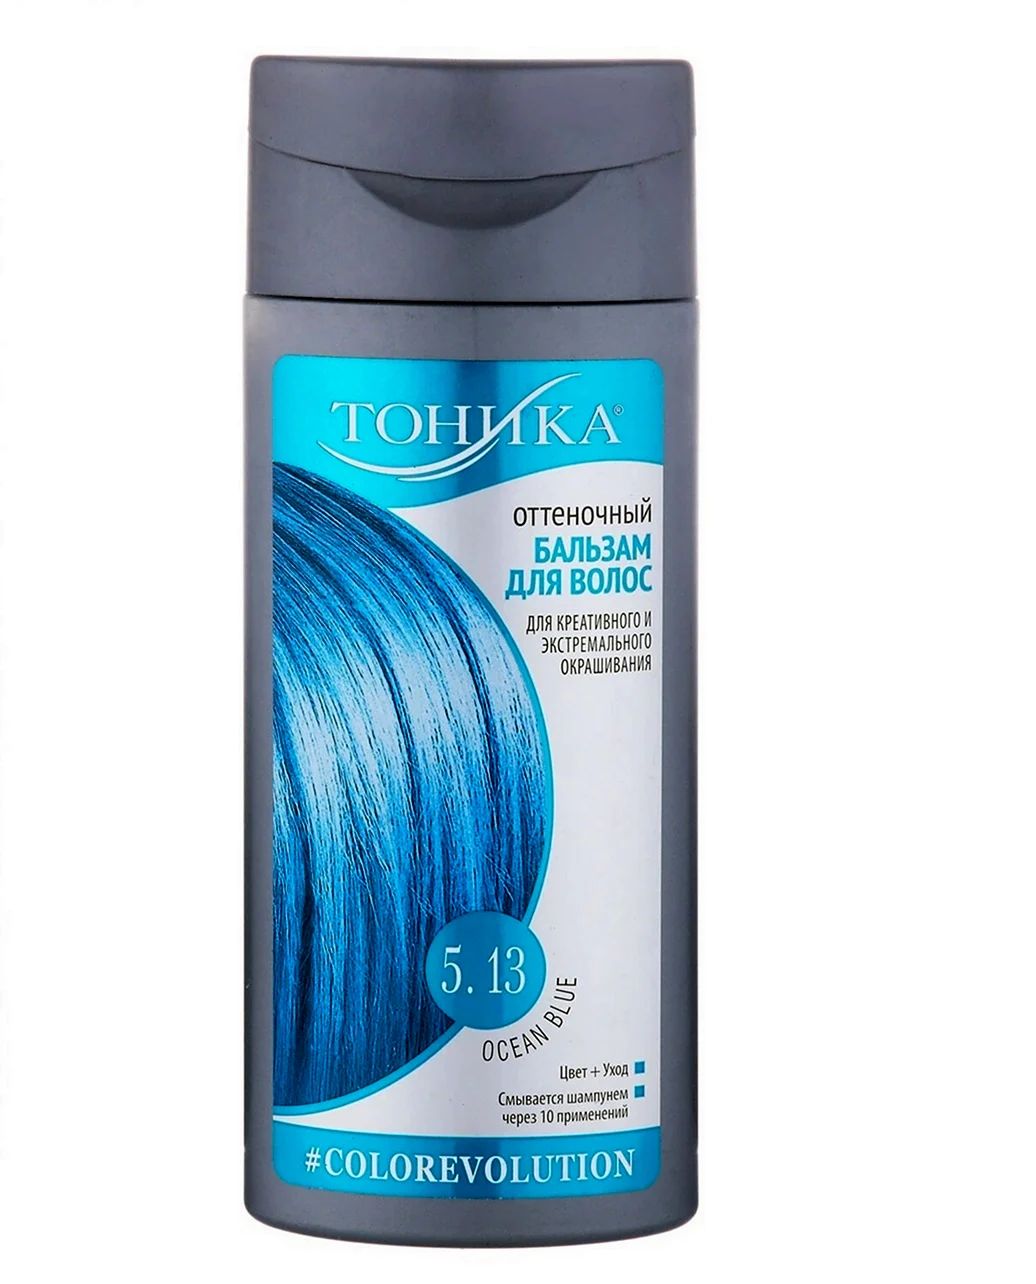 Синяя тоника для волос